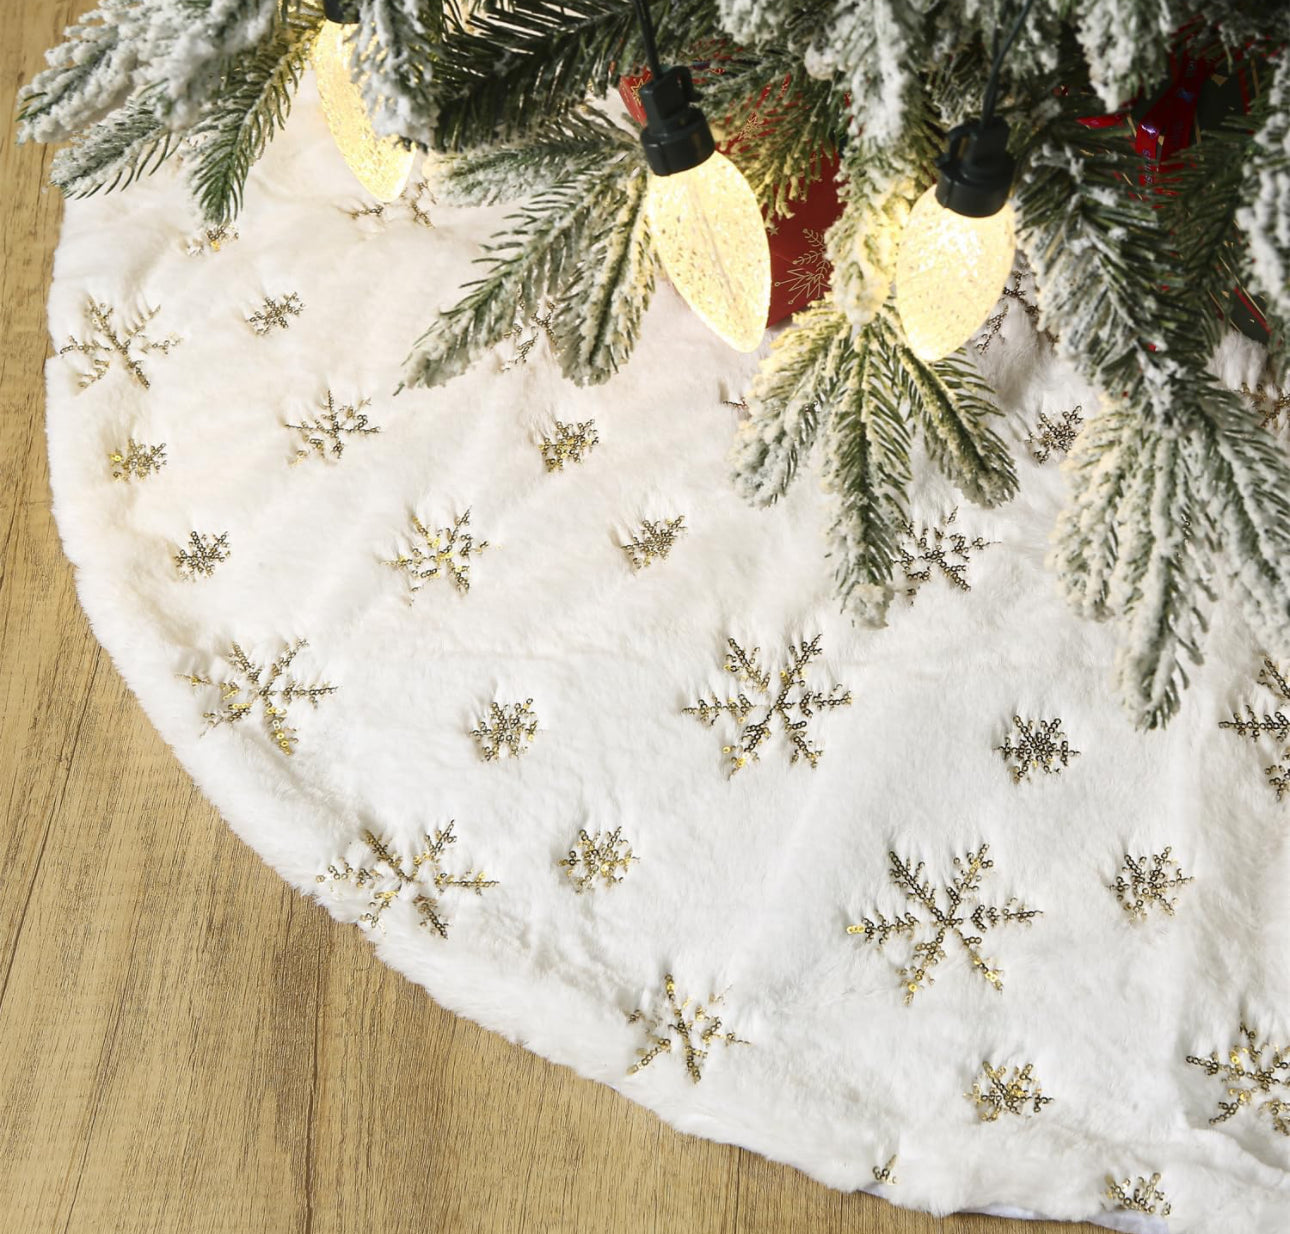 Masnest 48 Inch Faux Fur Christmas Tree Skirt,White Plush Golden Sequin Snowflake Xmas Christmas Tree Skirt (Golden, 48 inch)